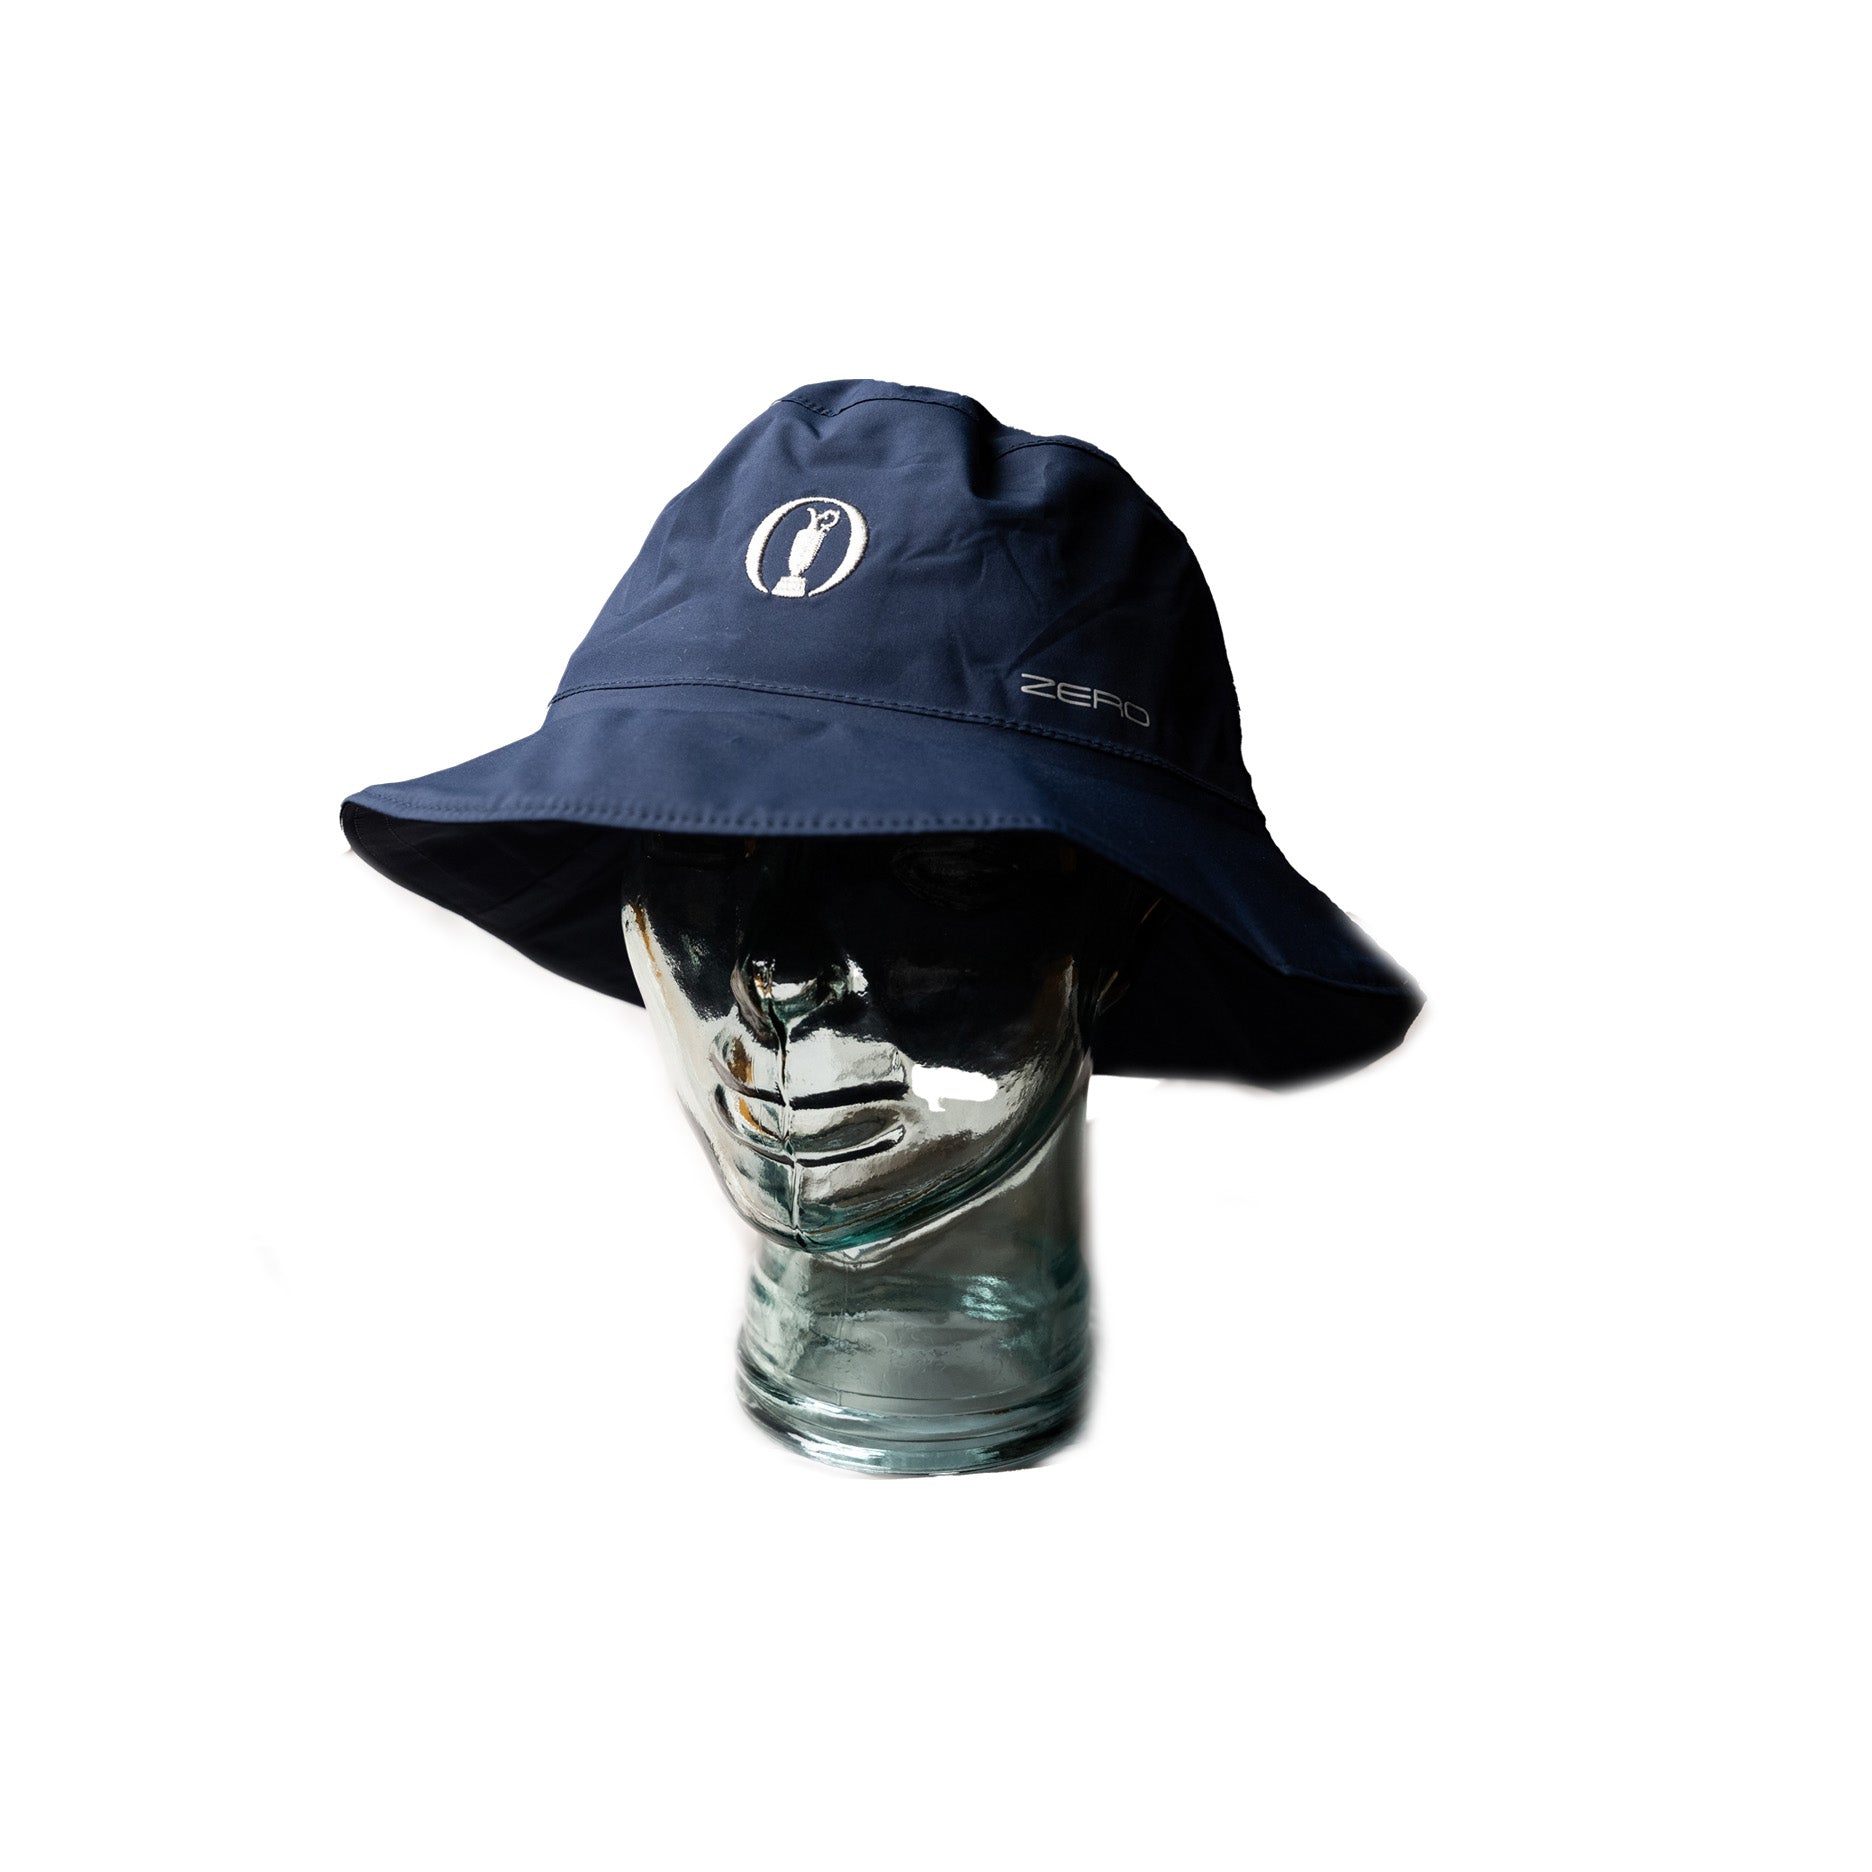 153rd Open Zero Restriction Waterproof Bucket Hat